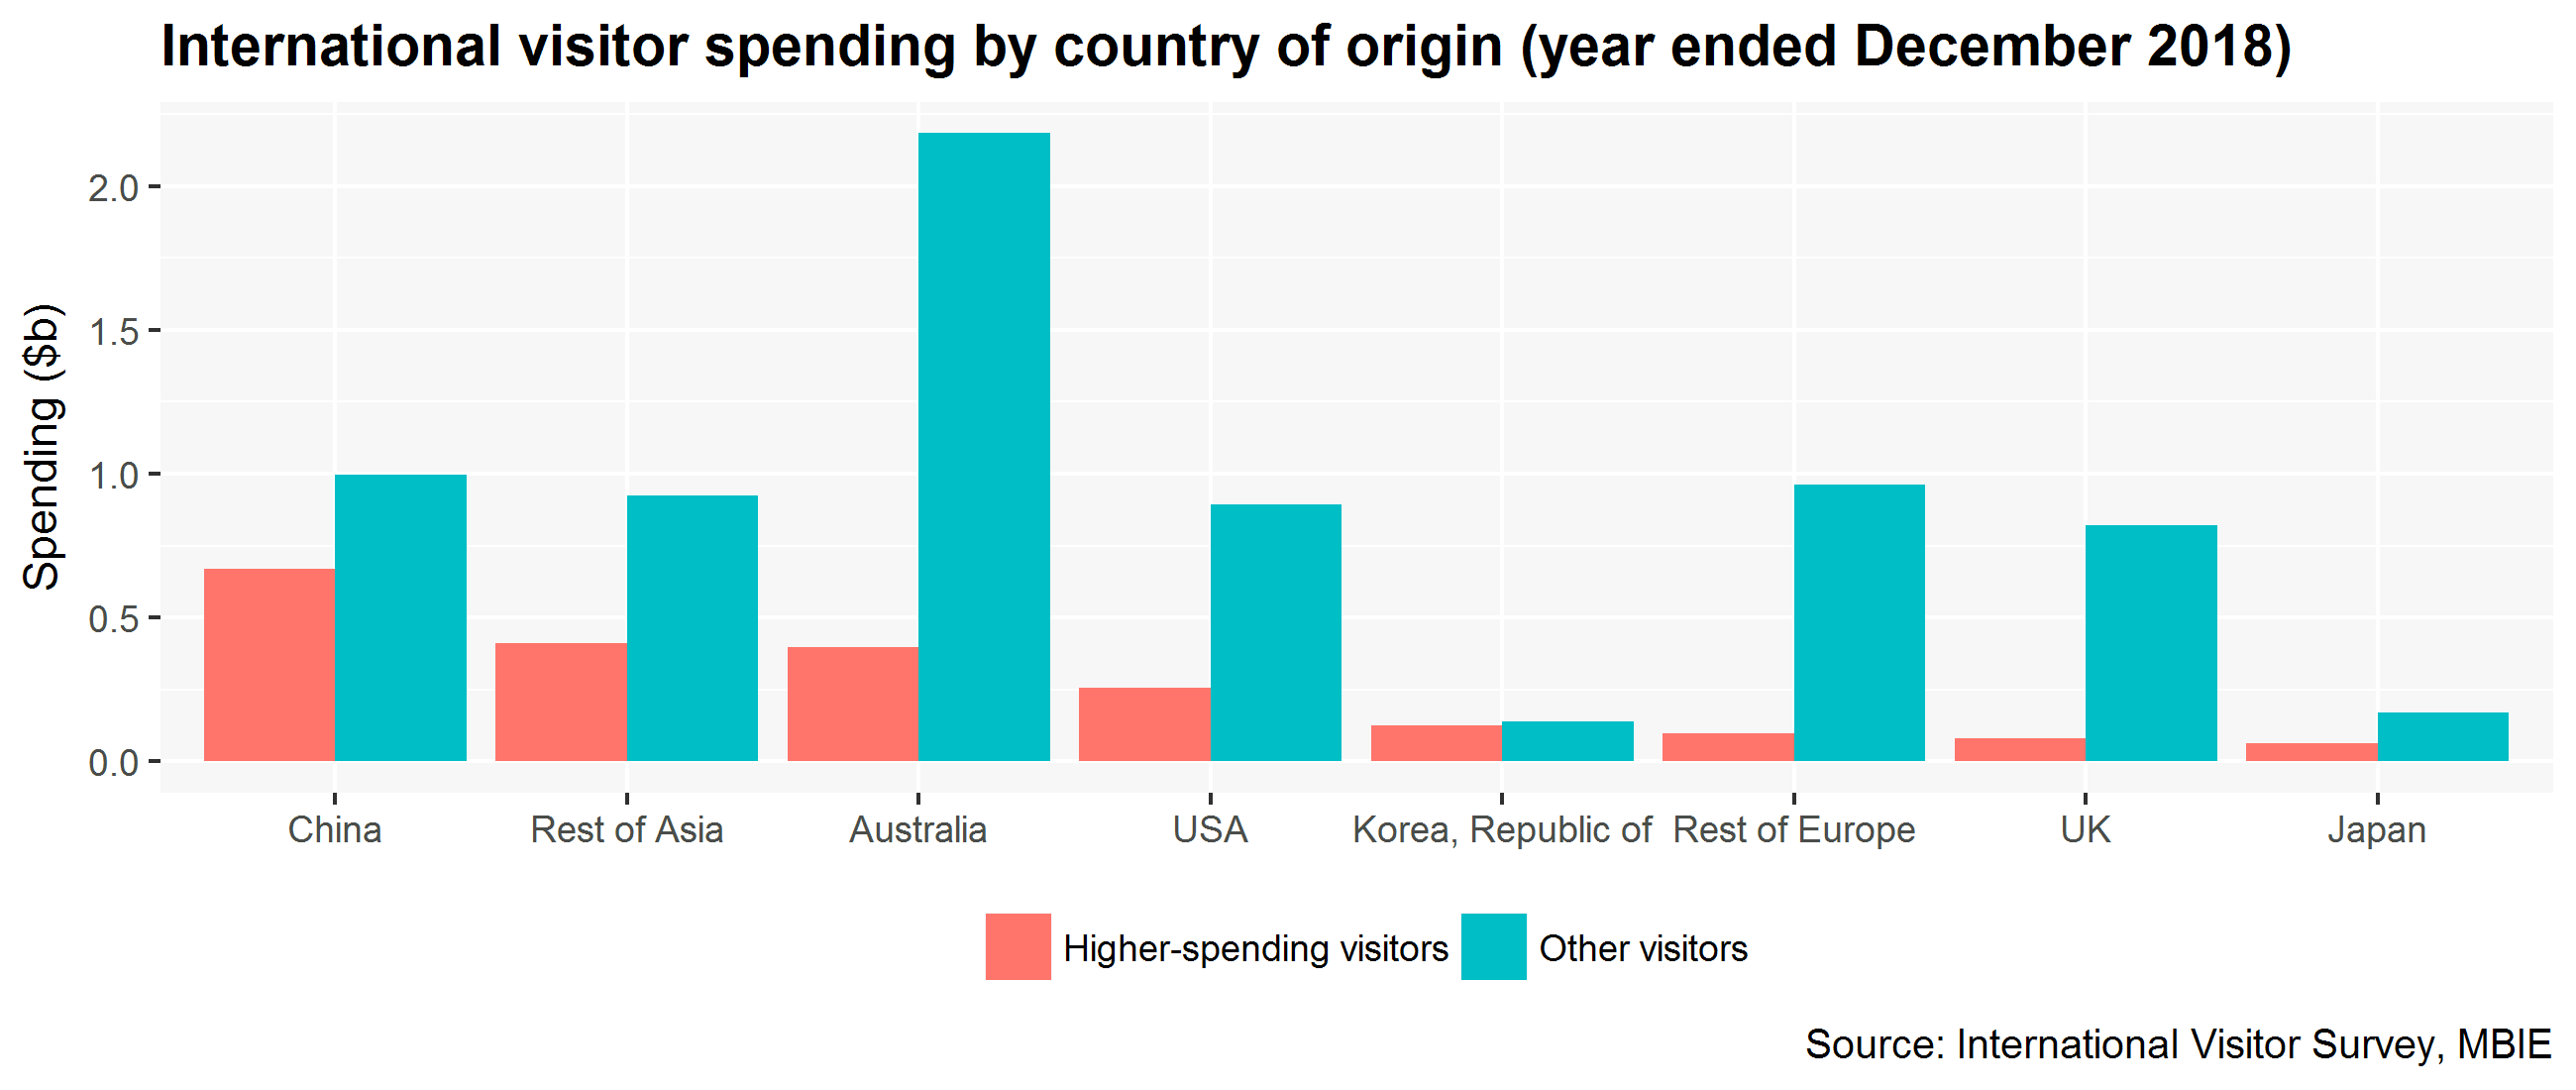 International visitor spending by country of origin, year ending December 2018